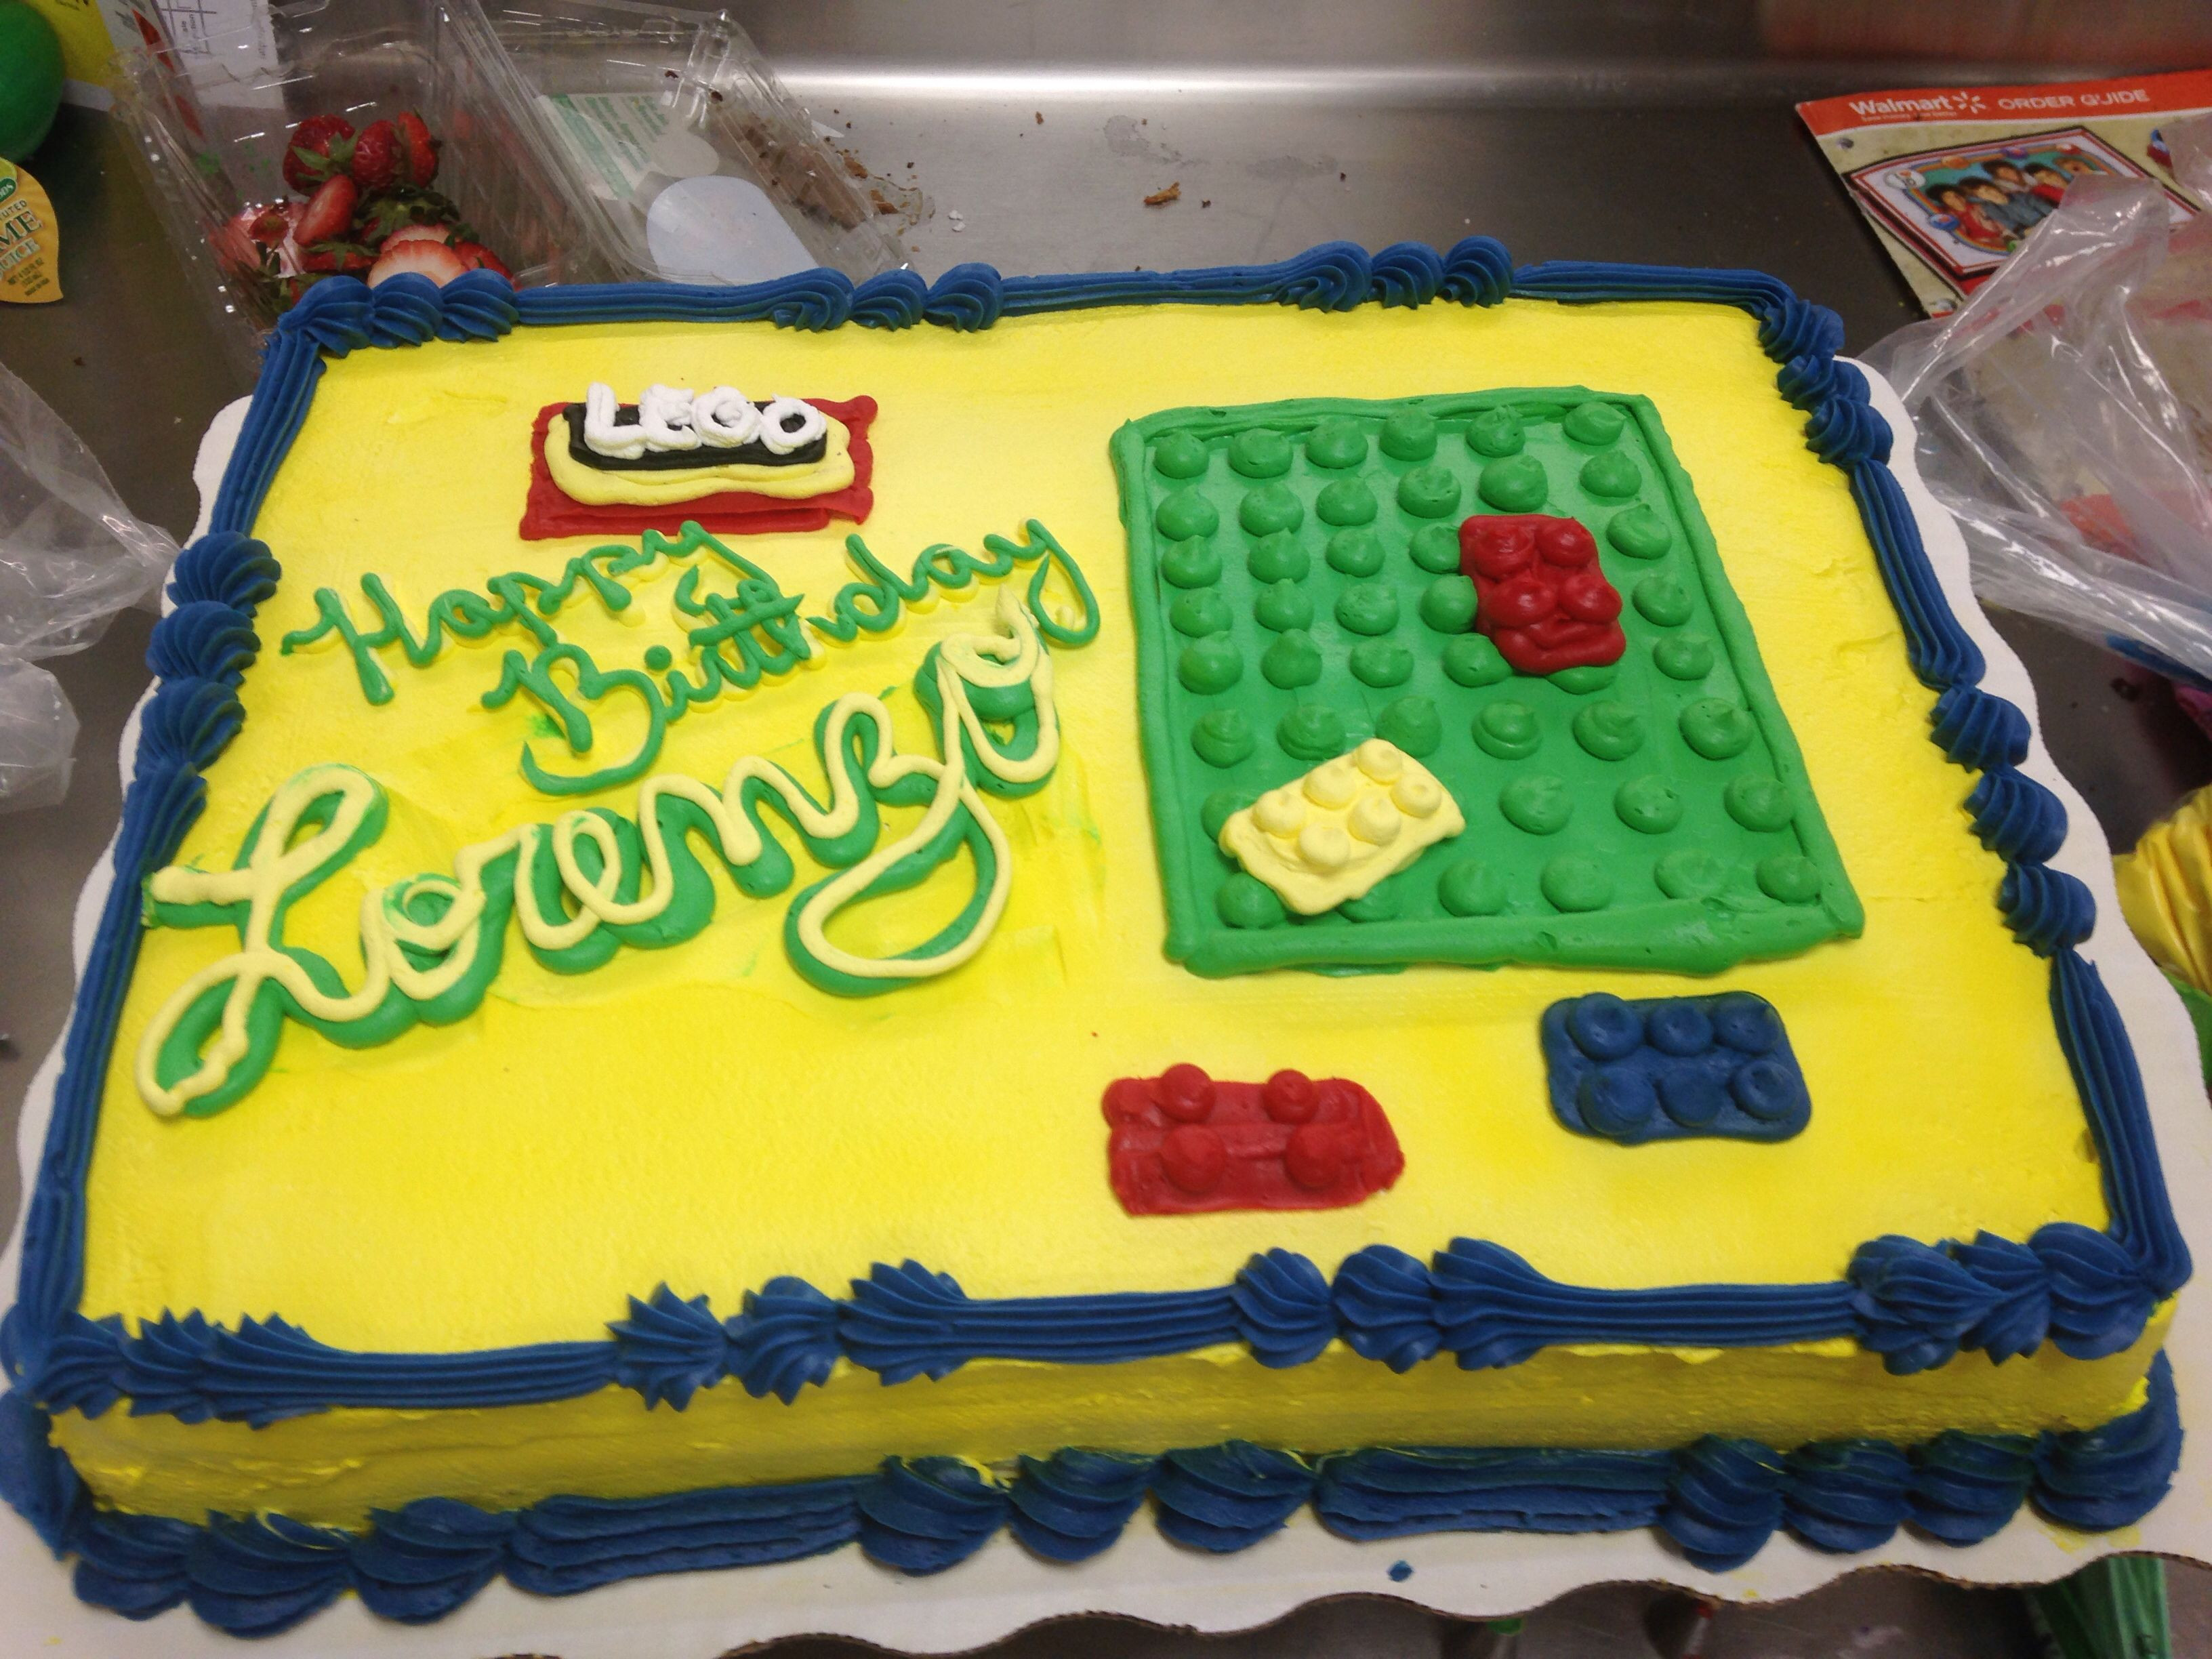 Best ideas about Lego Birthday Cake Walmart
. Save or Pin Lego cake Whipcream buttercream cake Walmart cake Now.